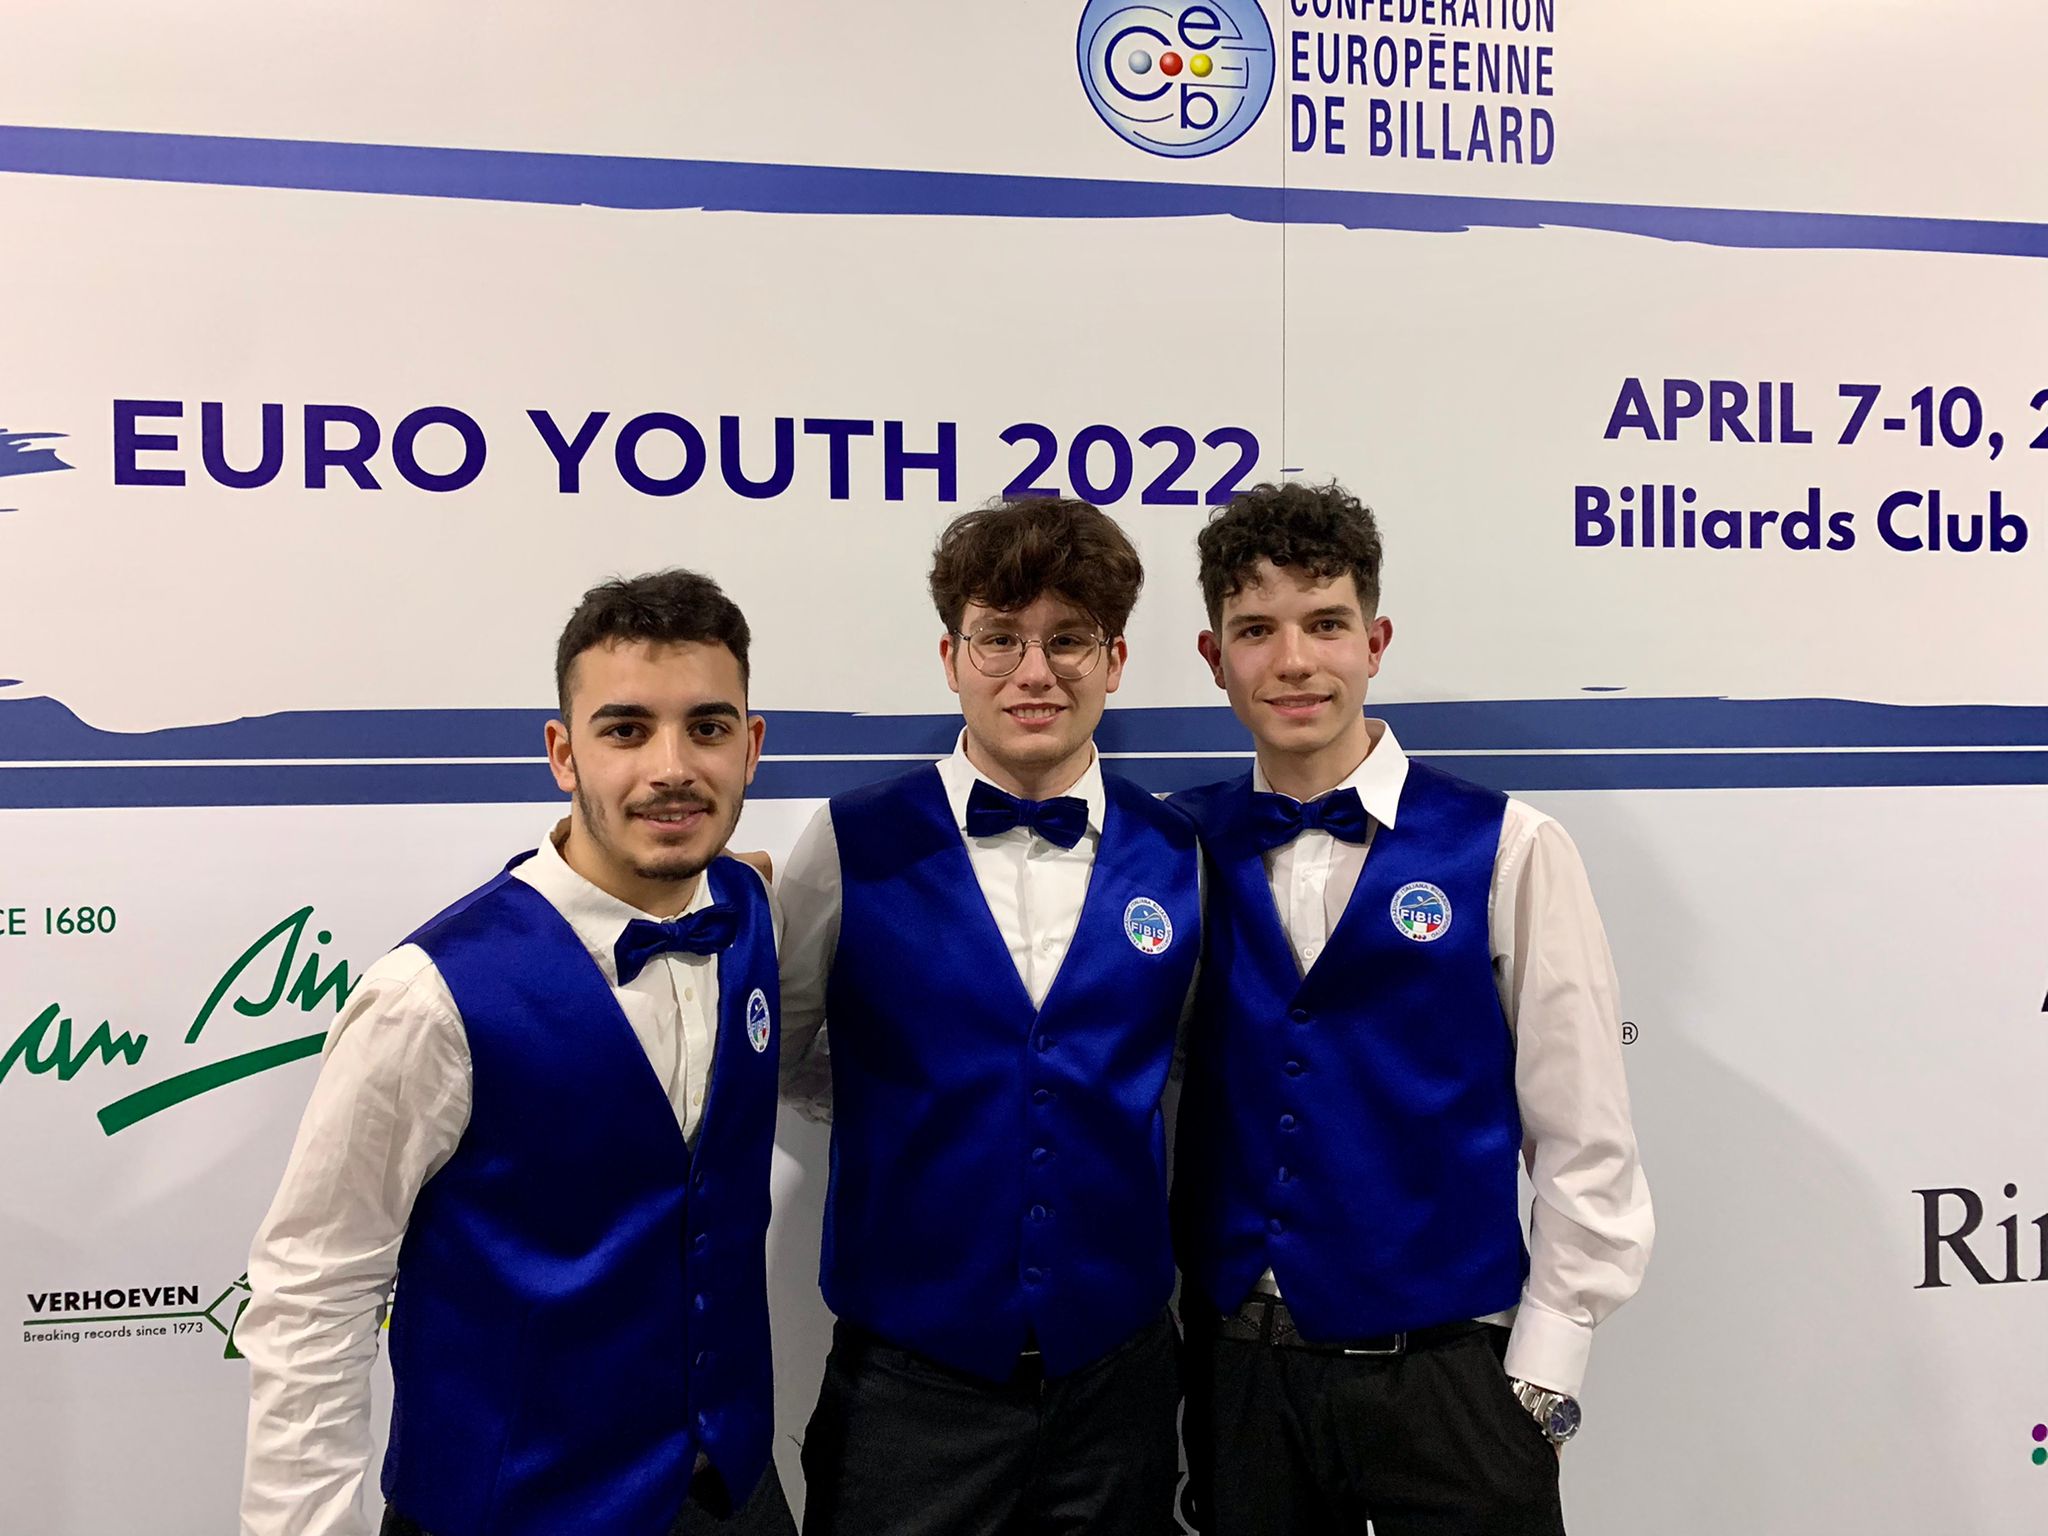 DAY 3 - EURO YOUTH 2022 - DESIO 